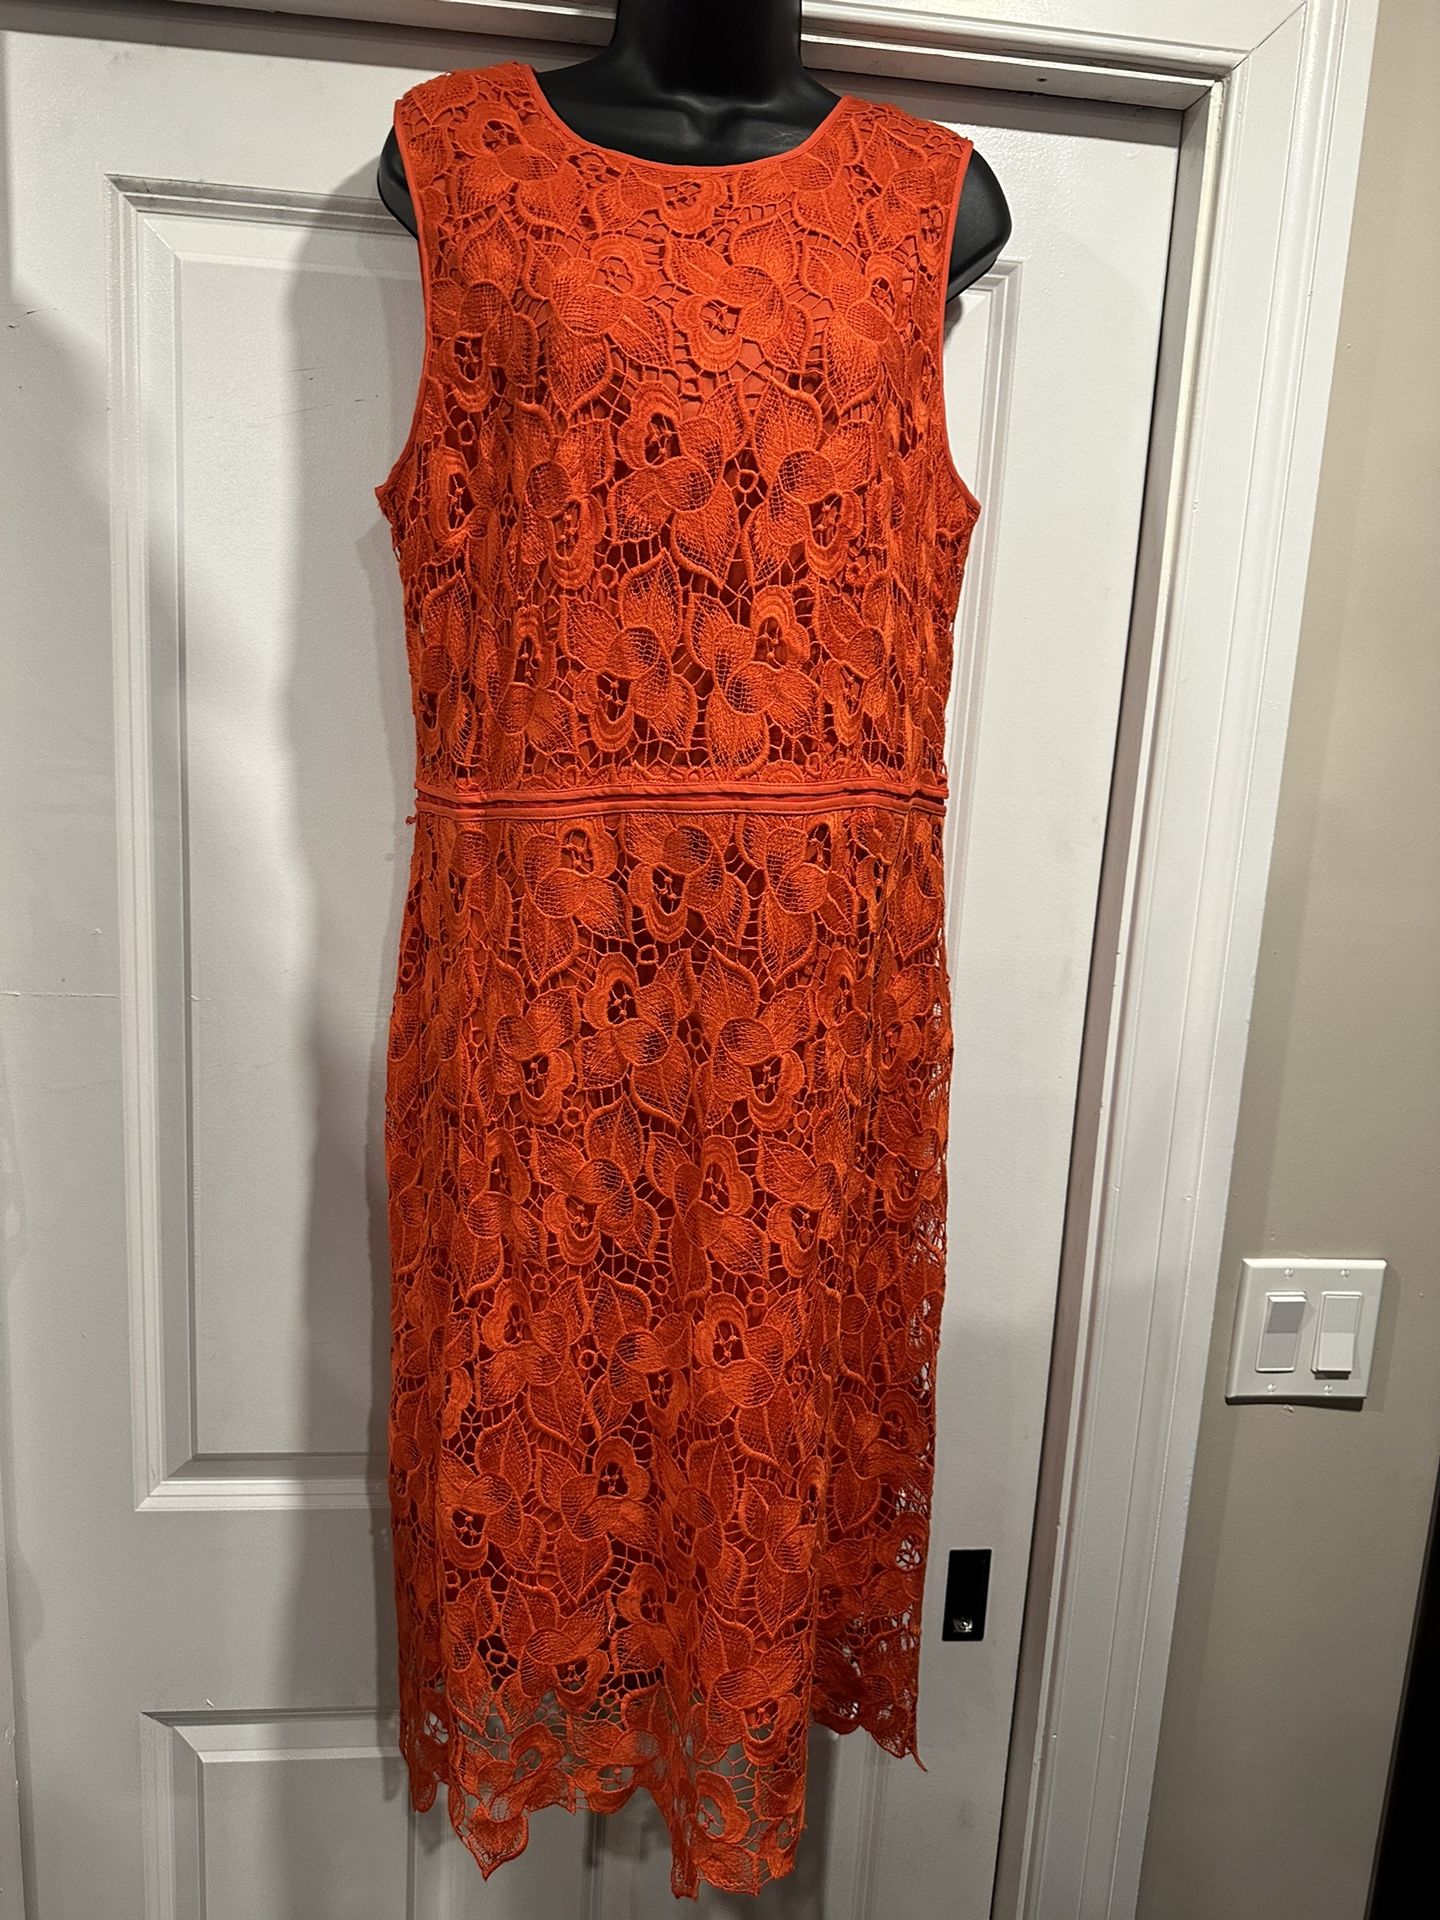 Vibrant Orange Lace Dress by Ann Taylor